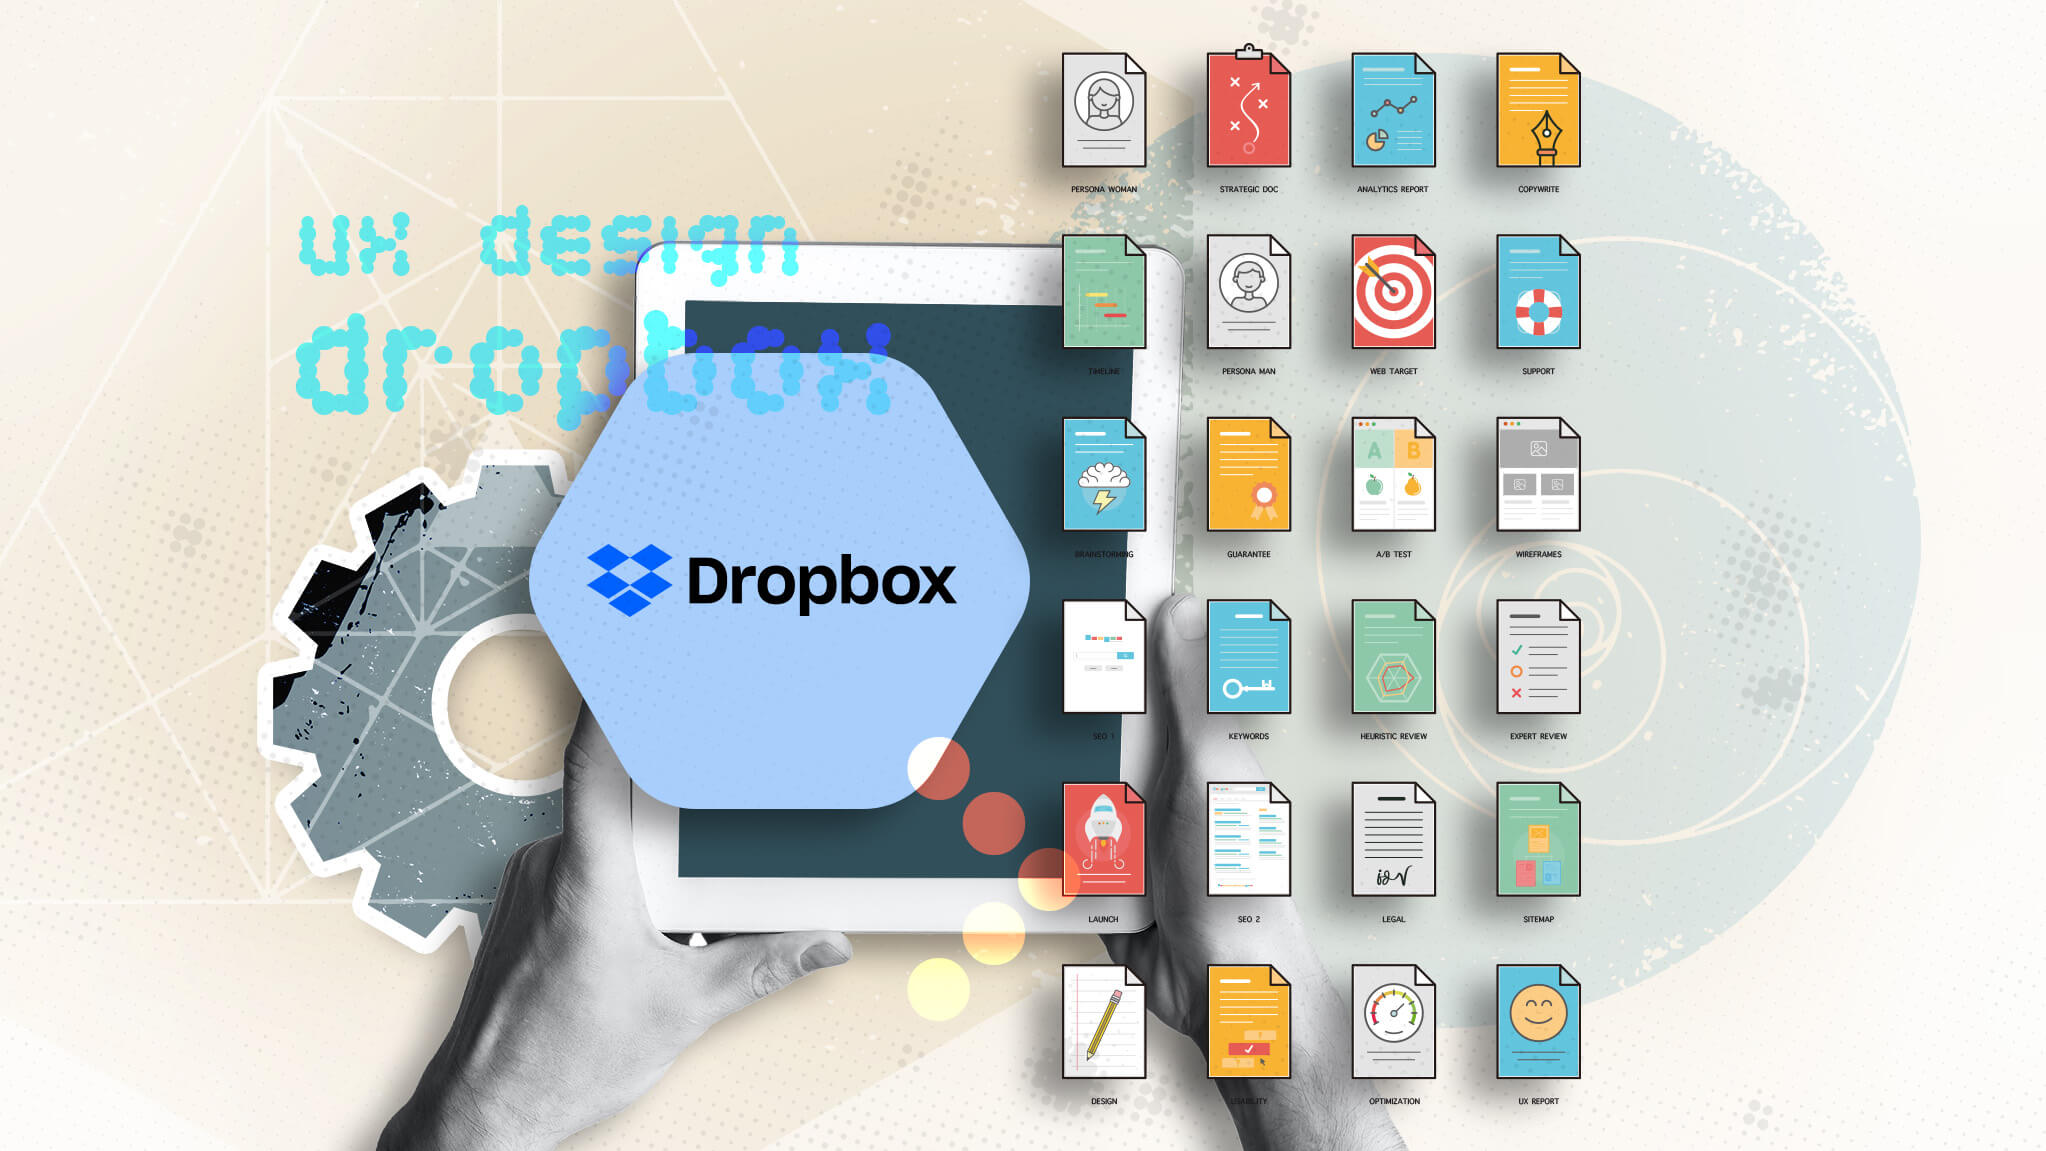 Dropbox logo, a blue box with an open top, containing a white ‘x’